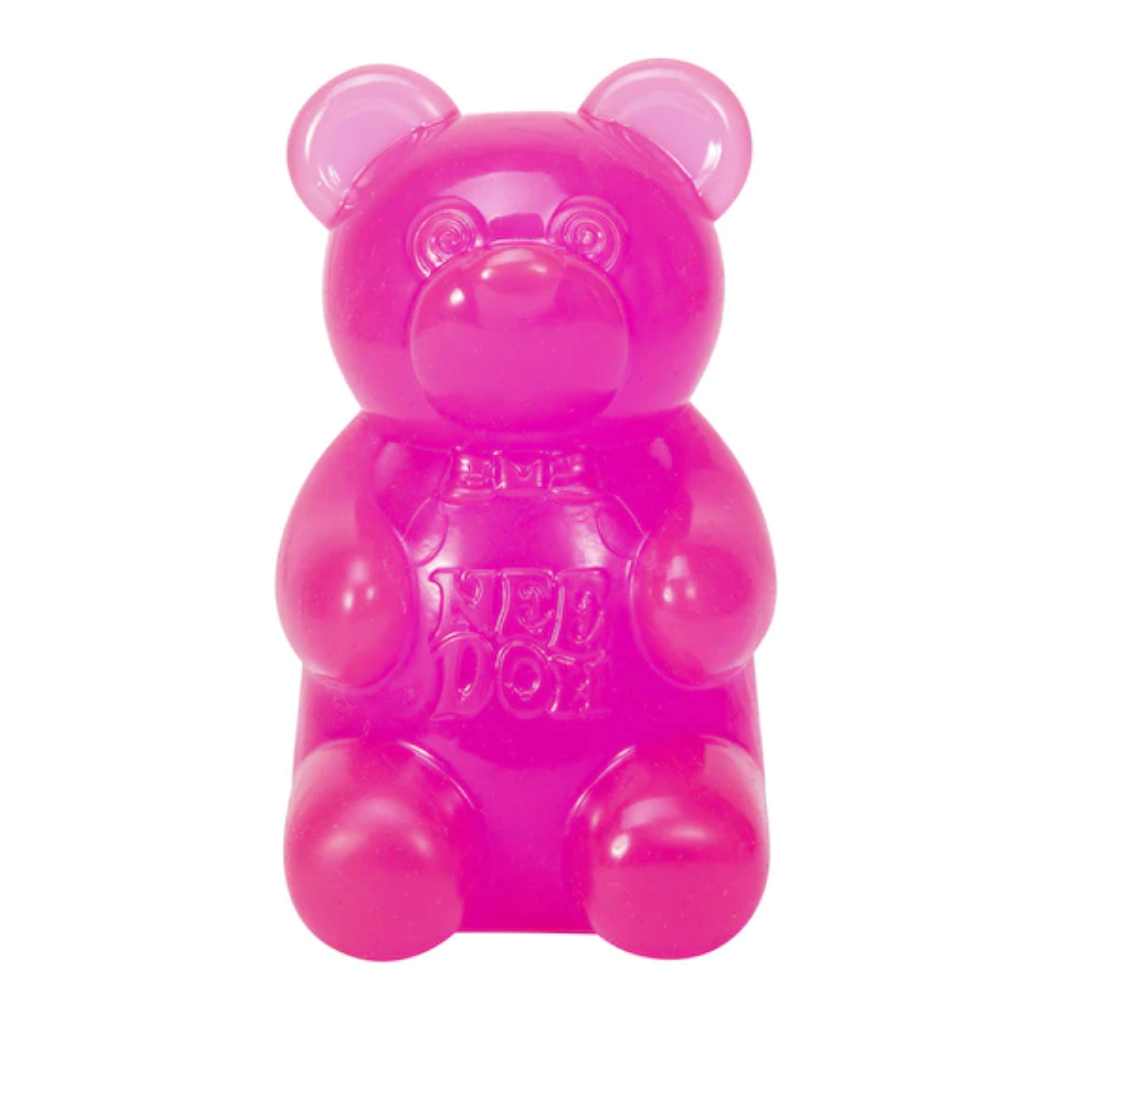 Pink NeeDoh Squishy Gummy Bear Toy